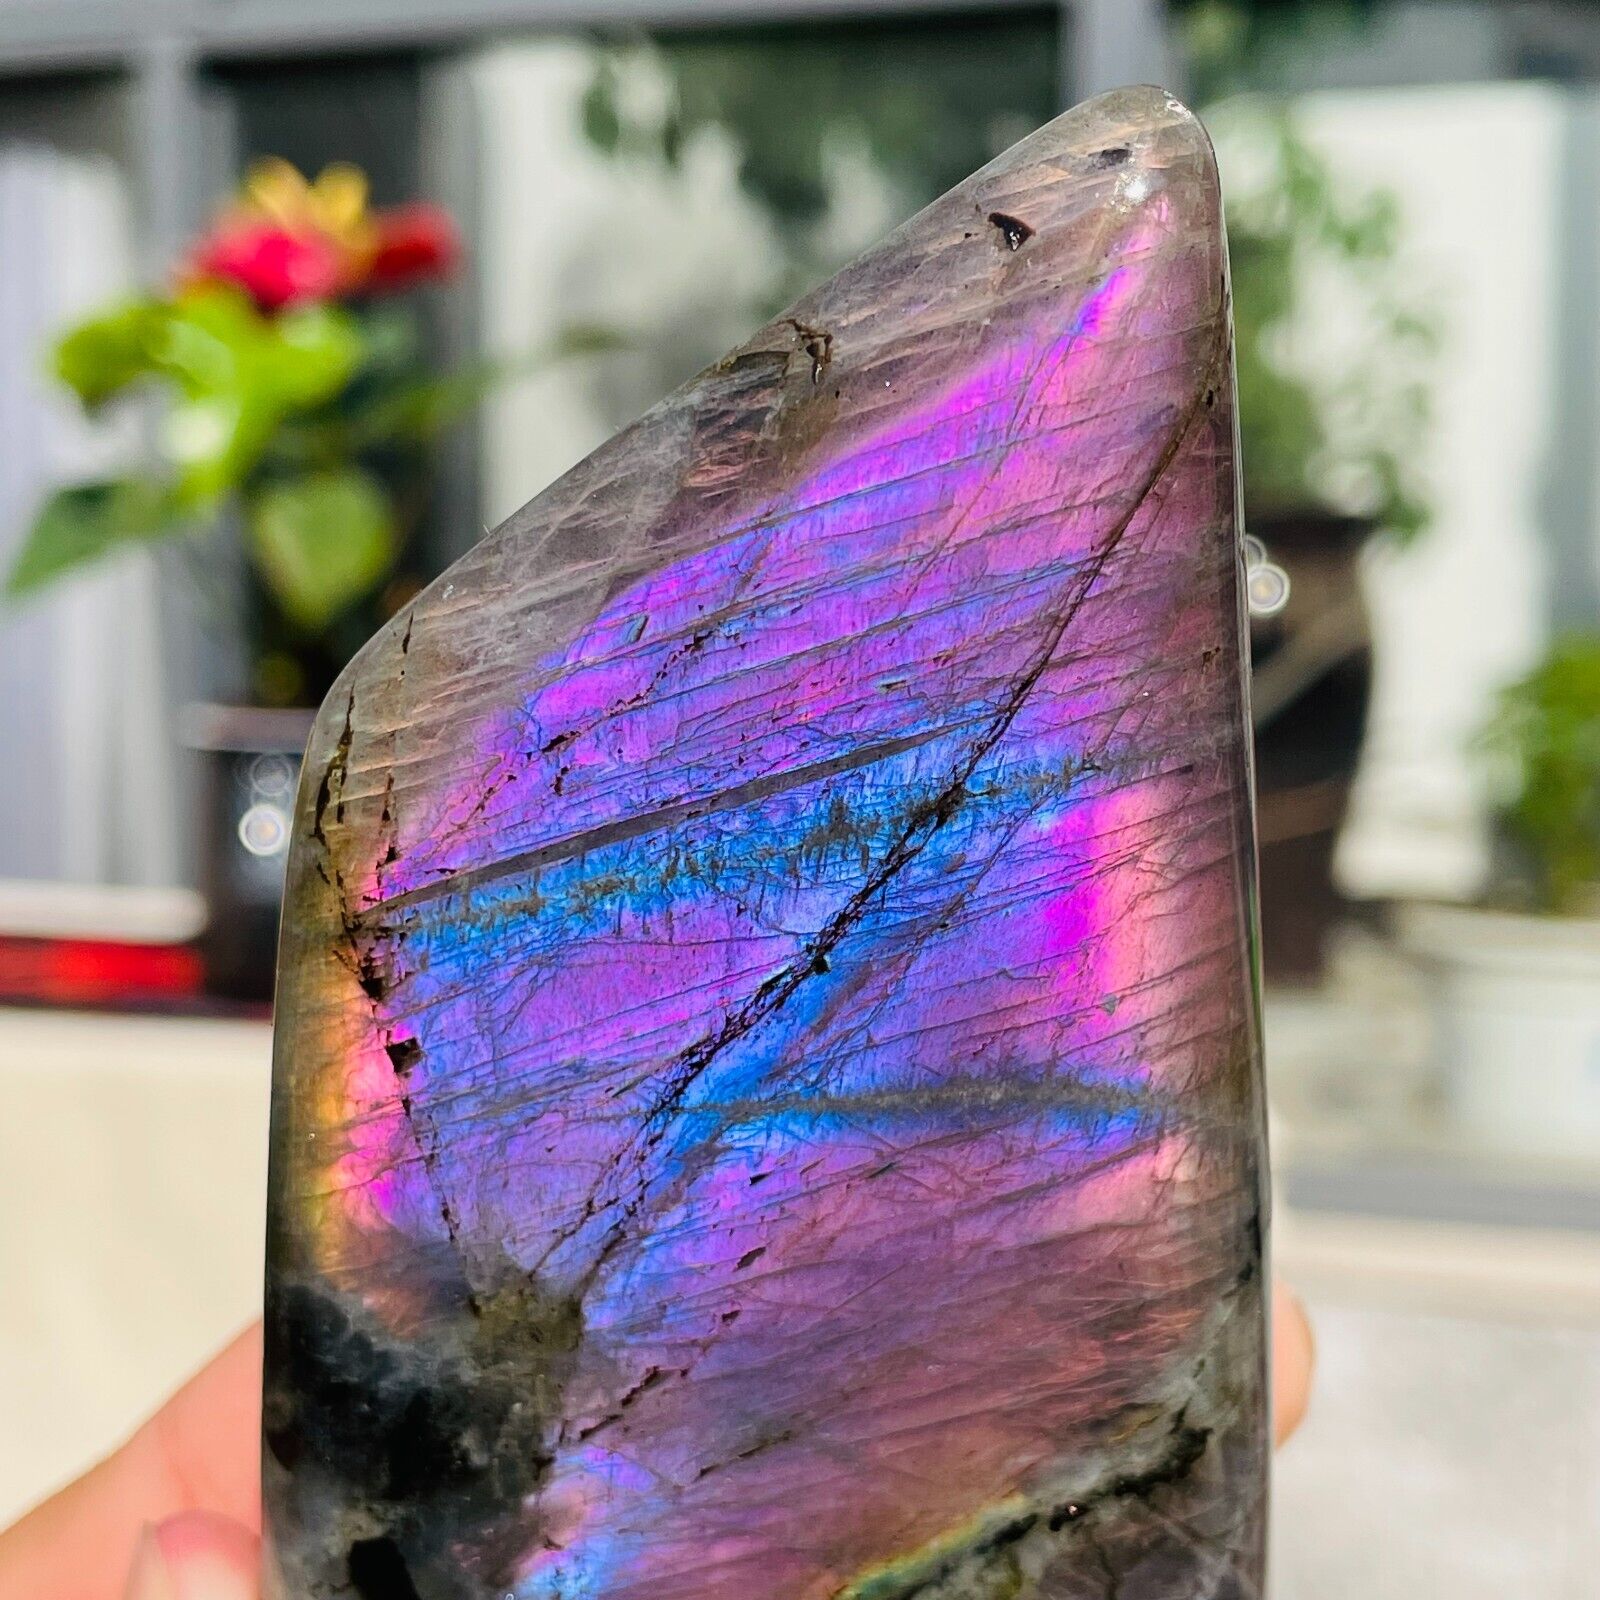 300g Rare Amazing Natural Purple Labradorite Quartz Crystal Specimen Healing